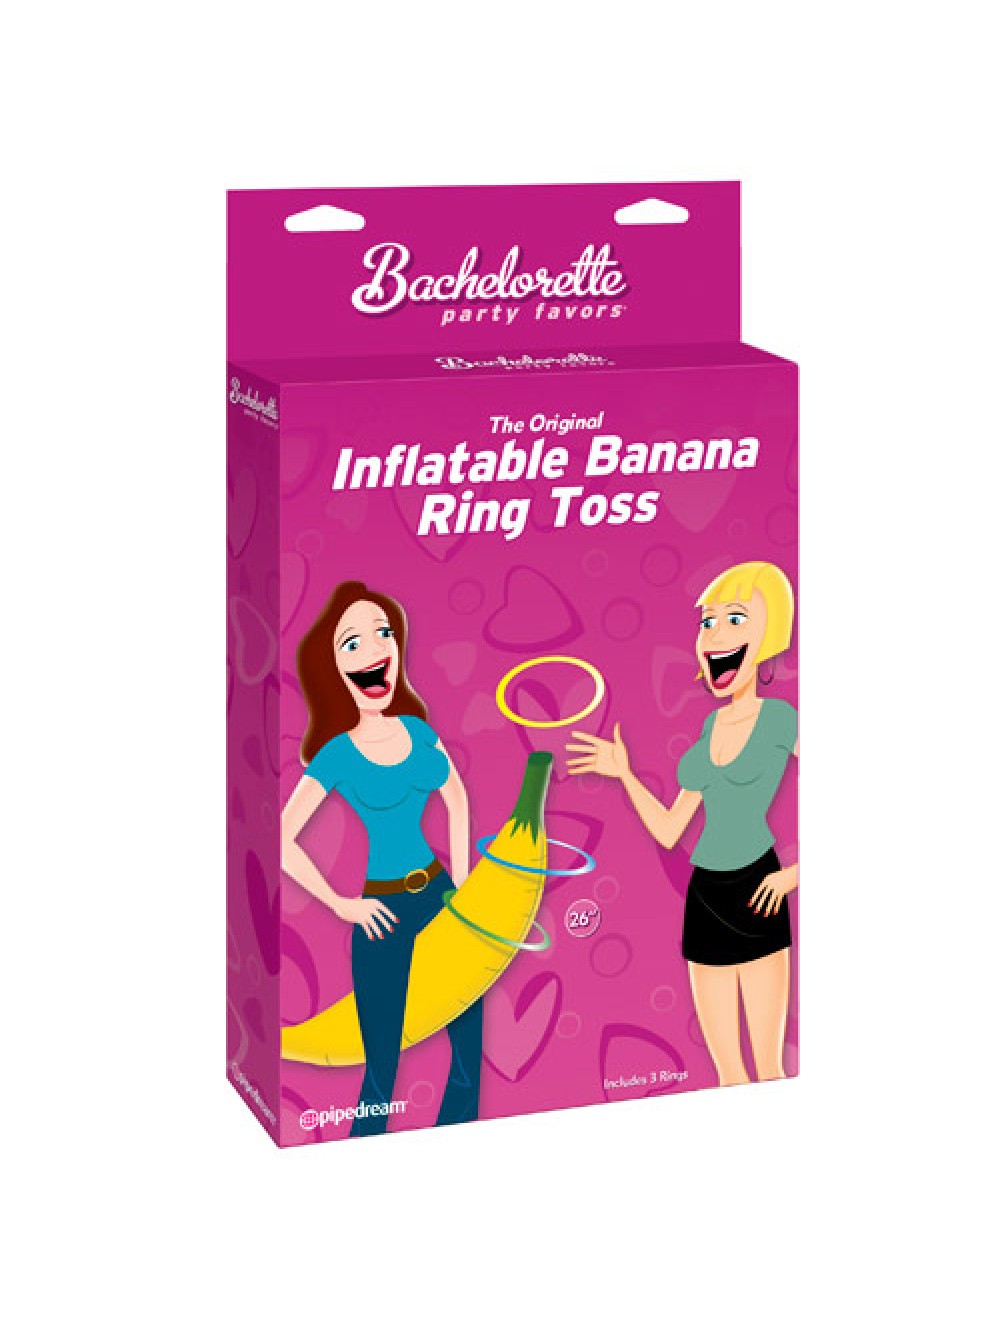 Inflatable Banana Ring Toss